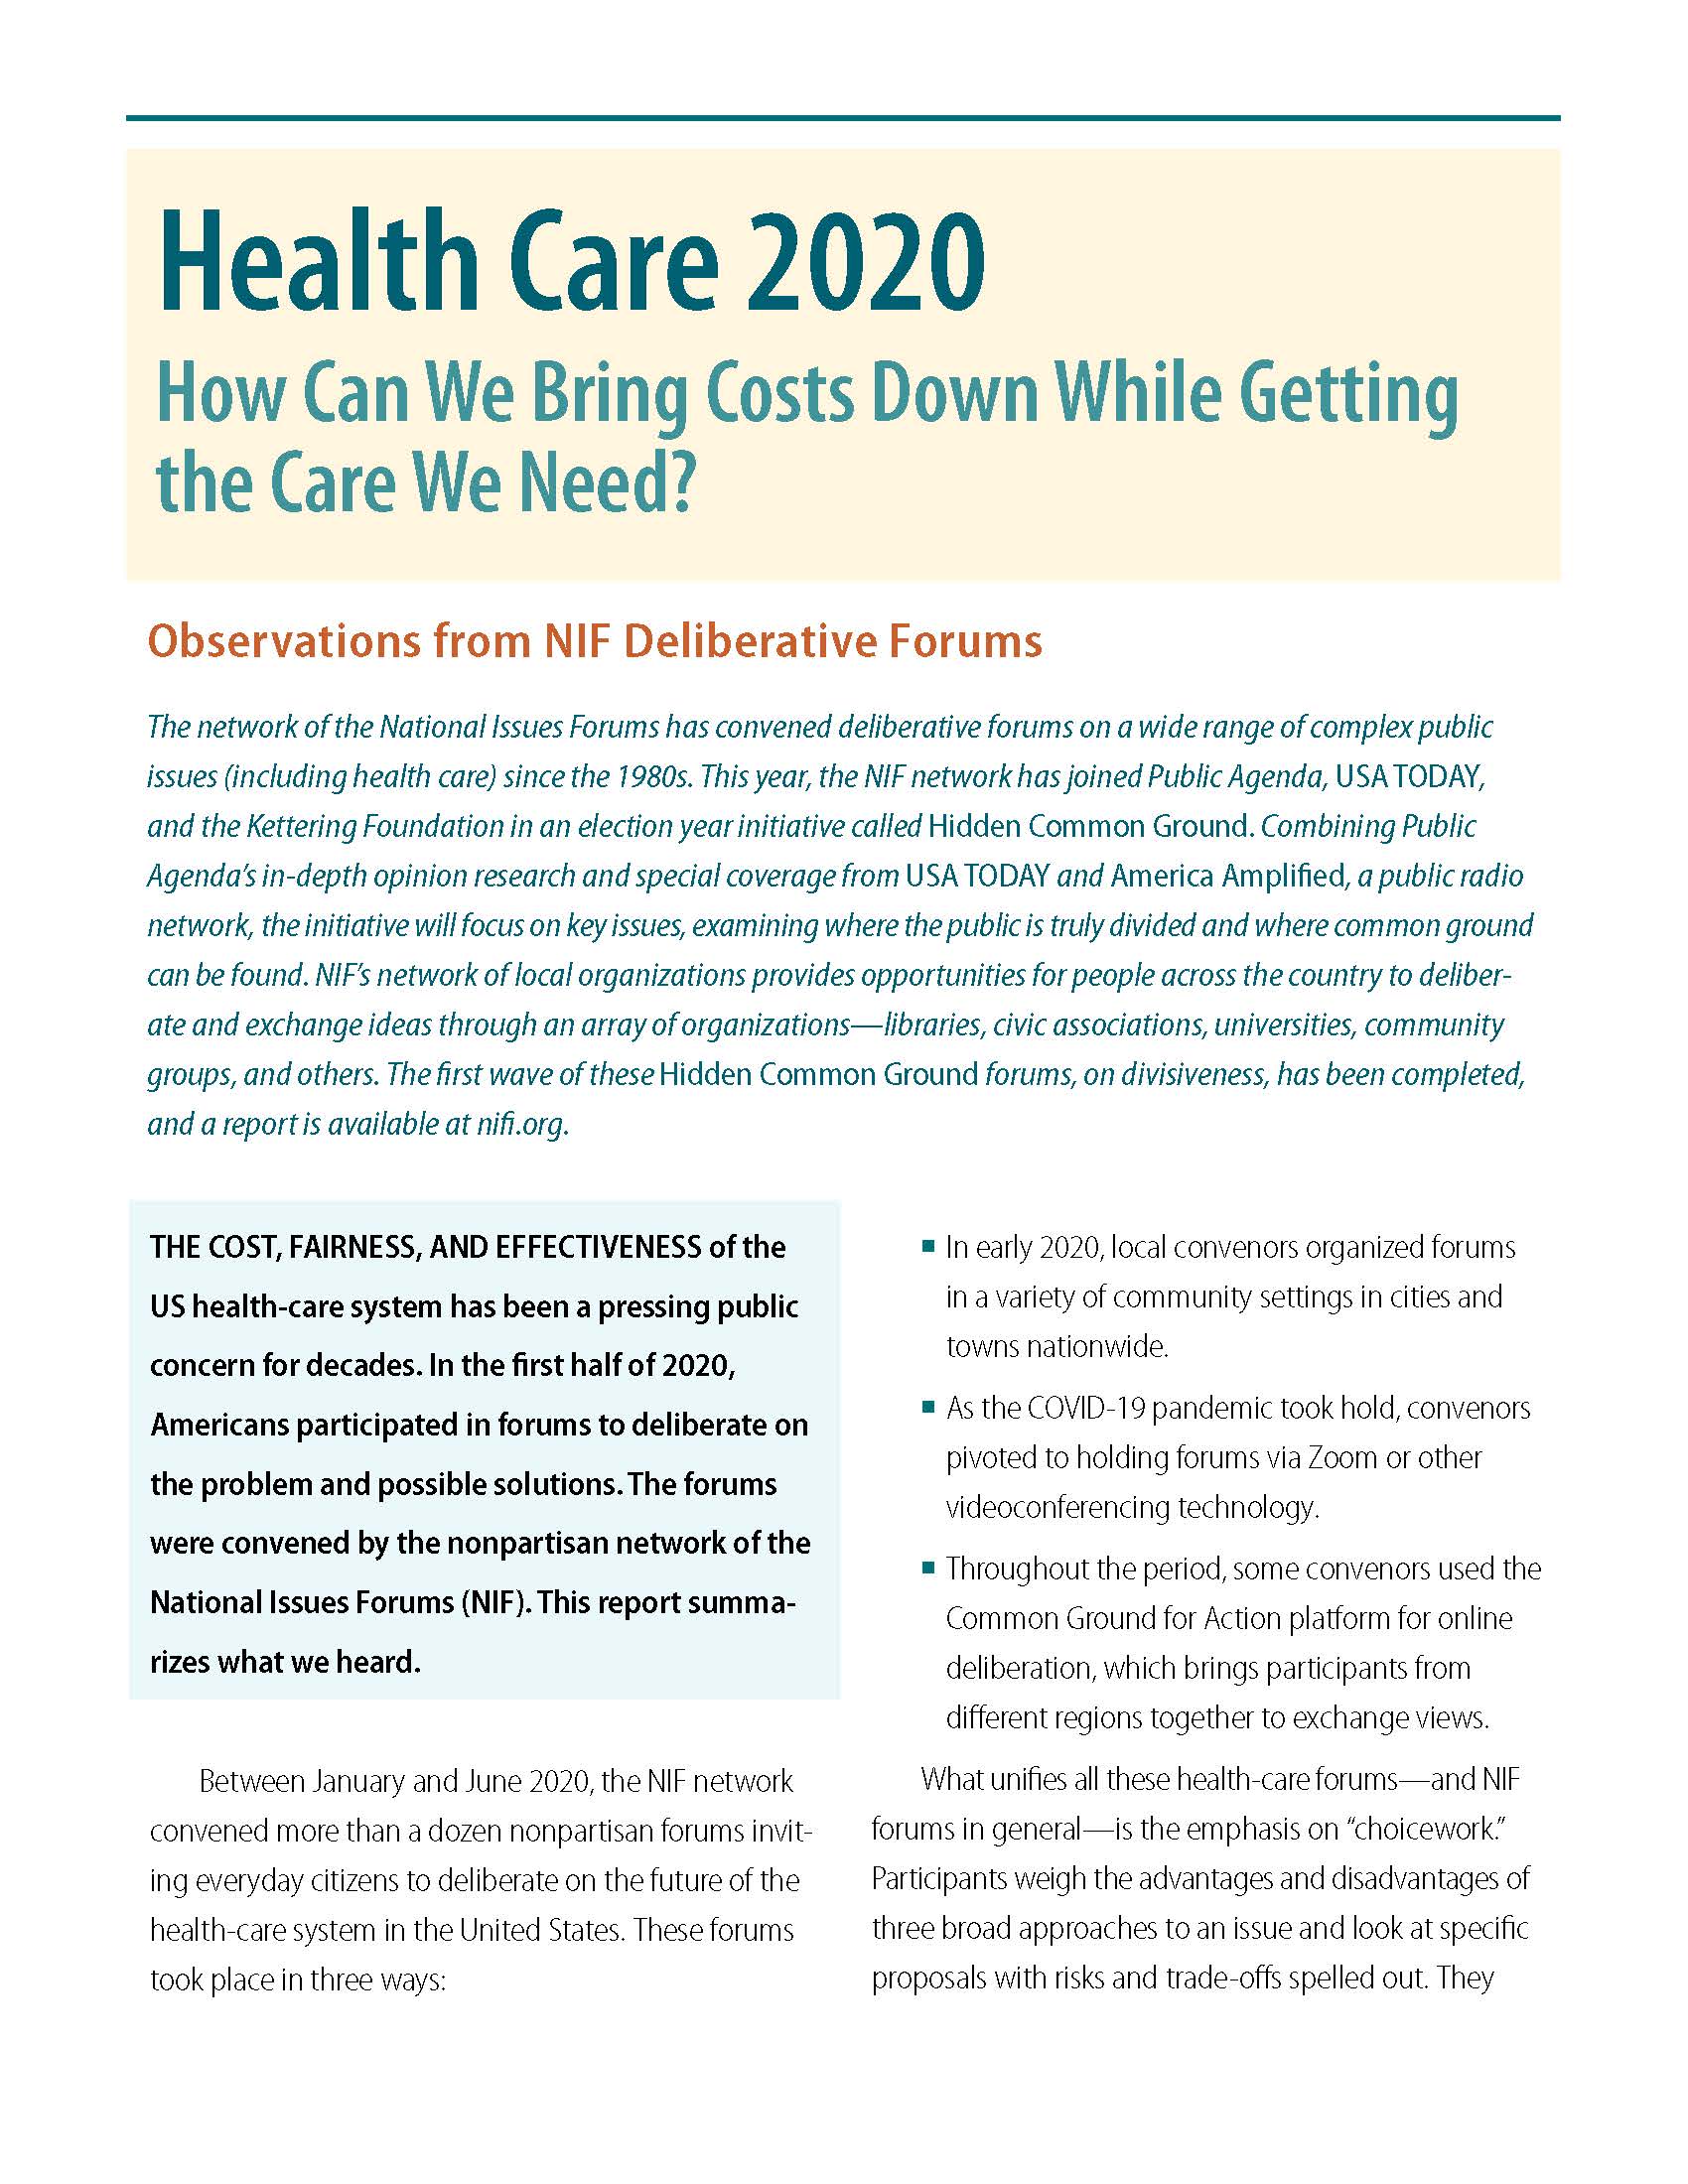 Health Care report cover